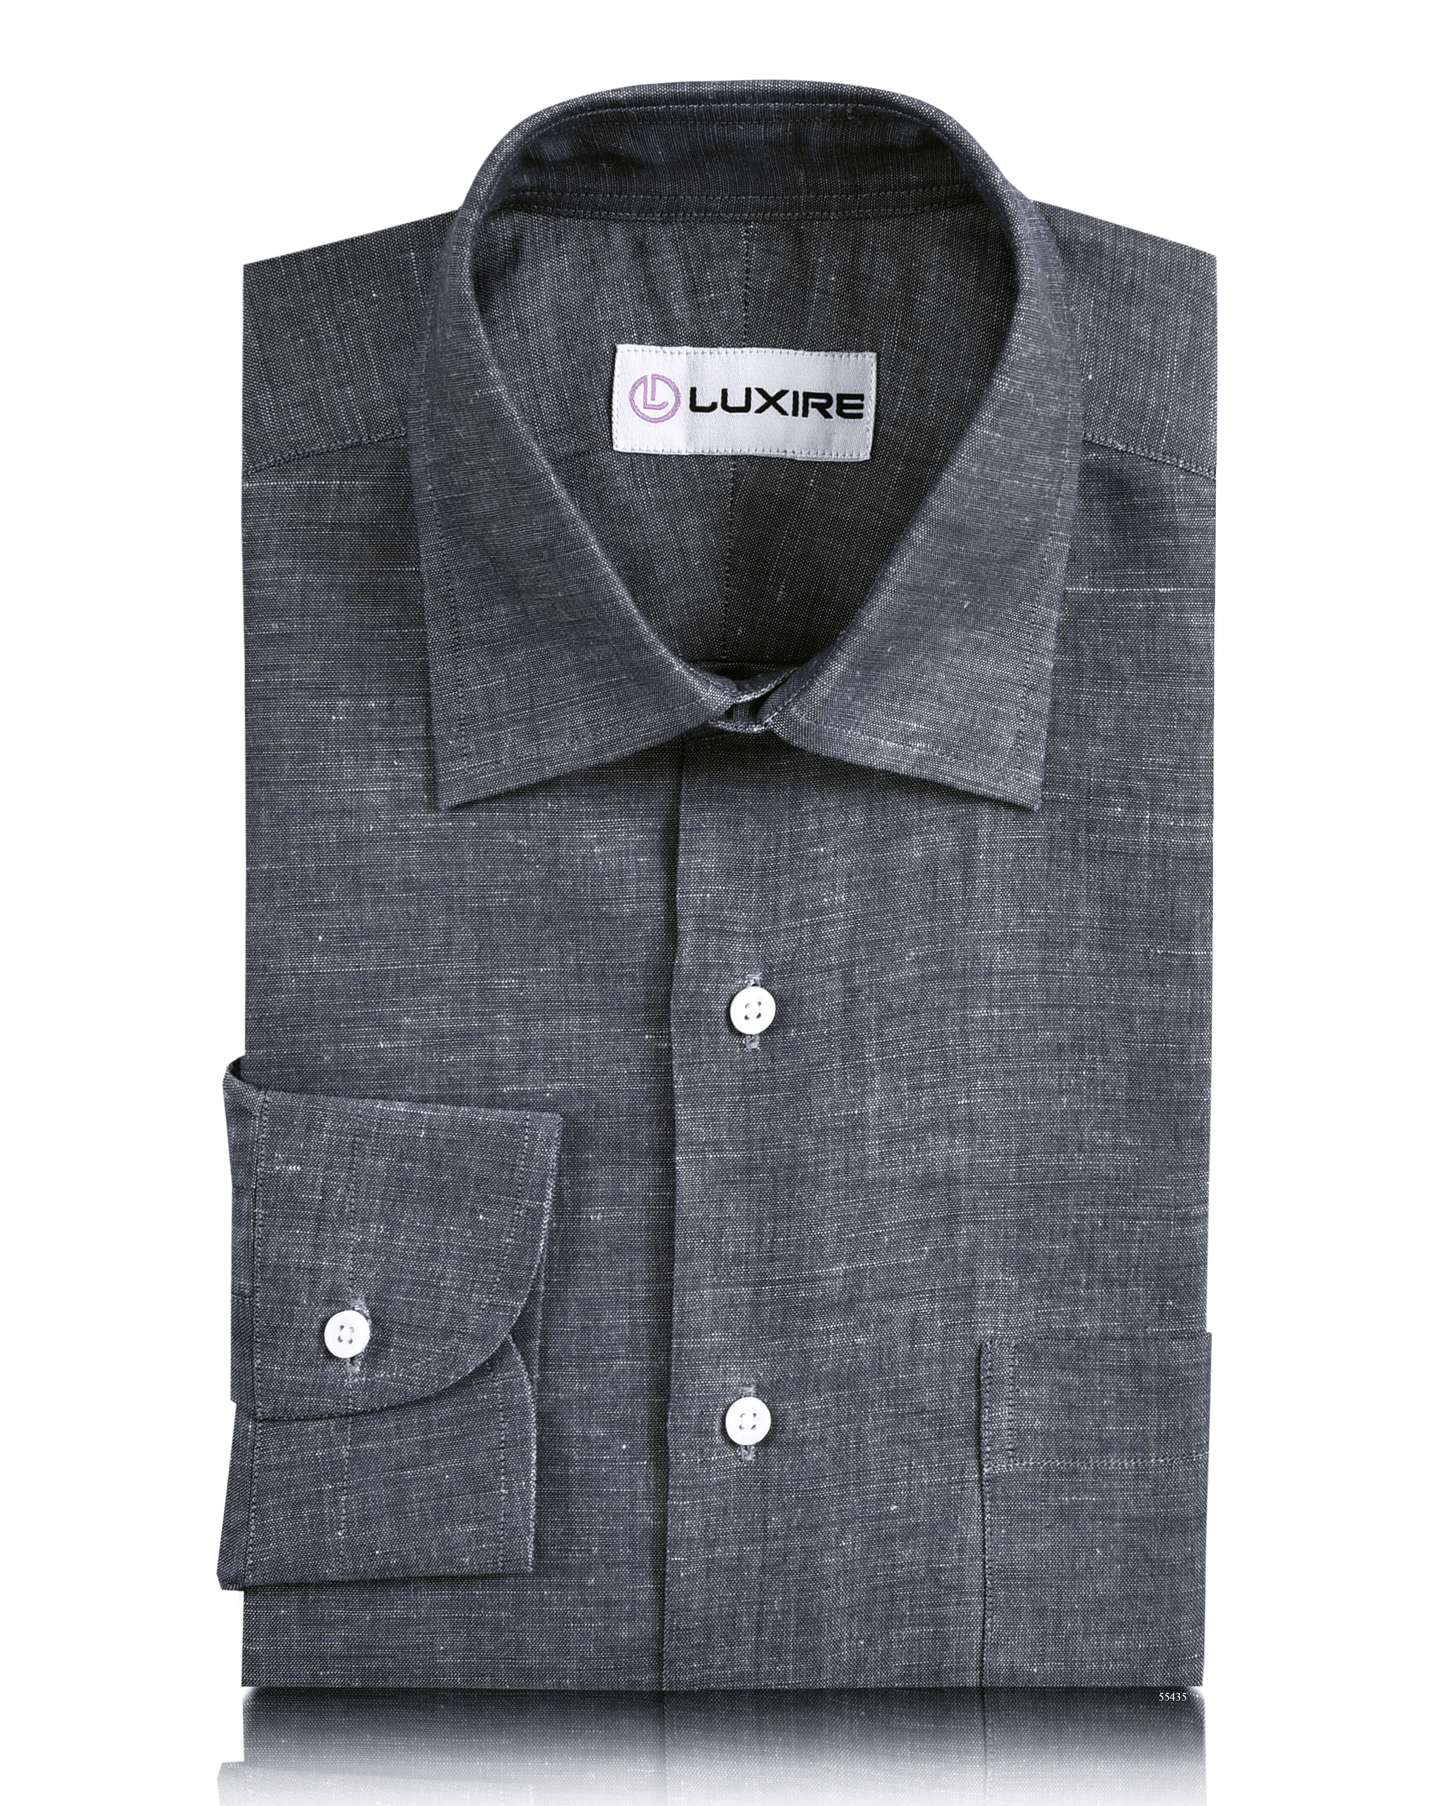 Cotton Linen: Greyish Navy Chambray Shirt